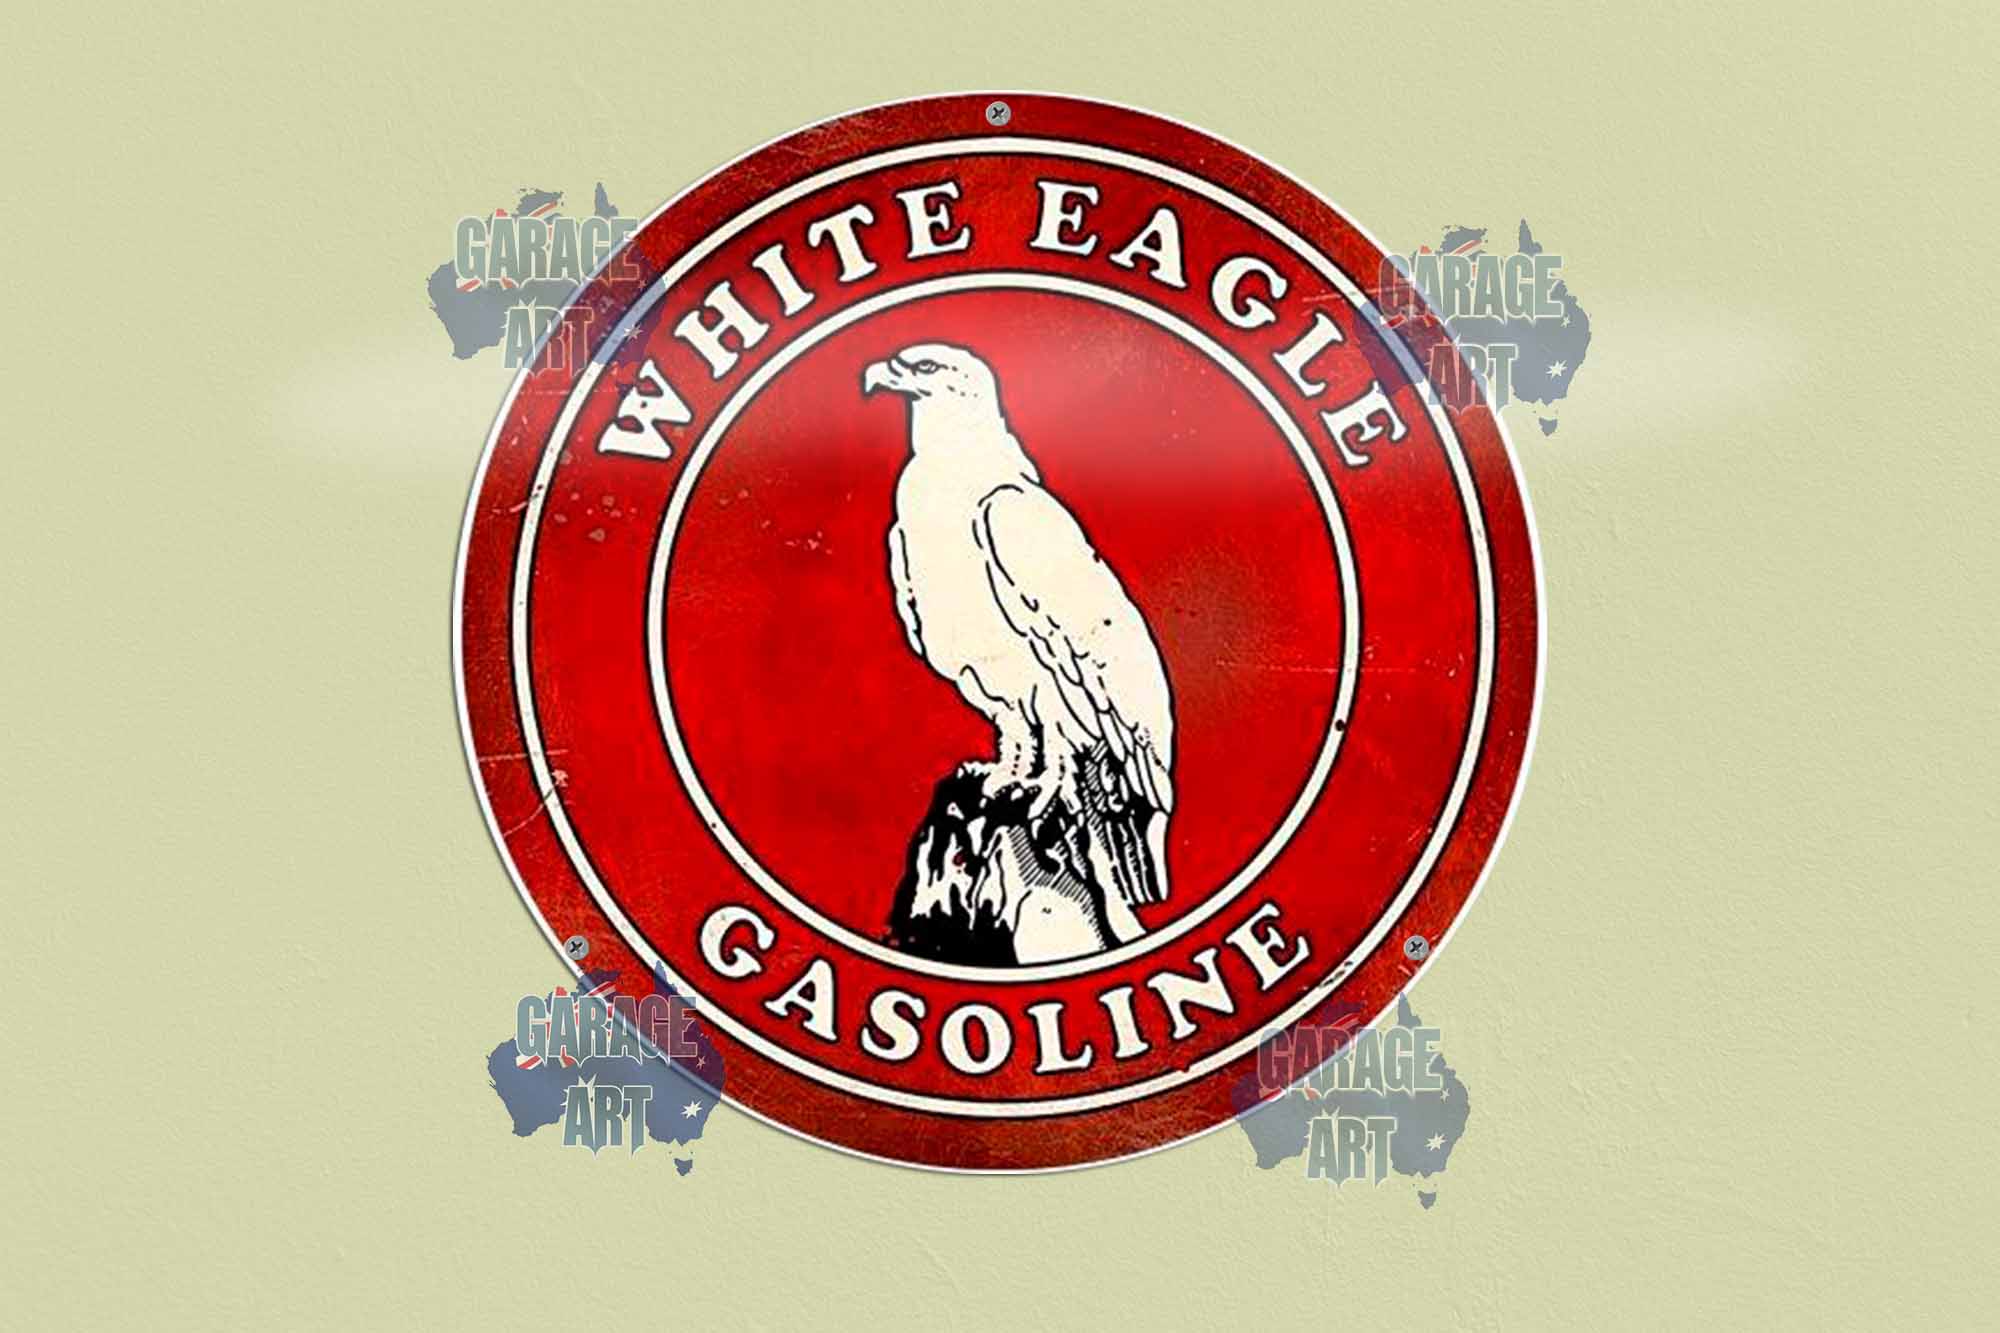 White Eagle 3D 355mmDIa Tin Sign freeshipping - garageartaustralia